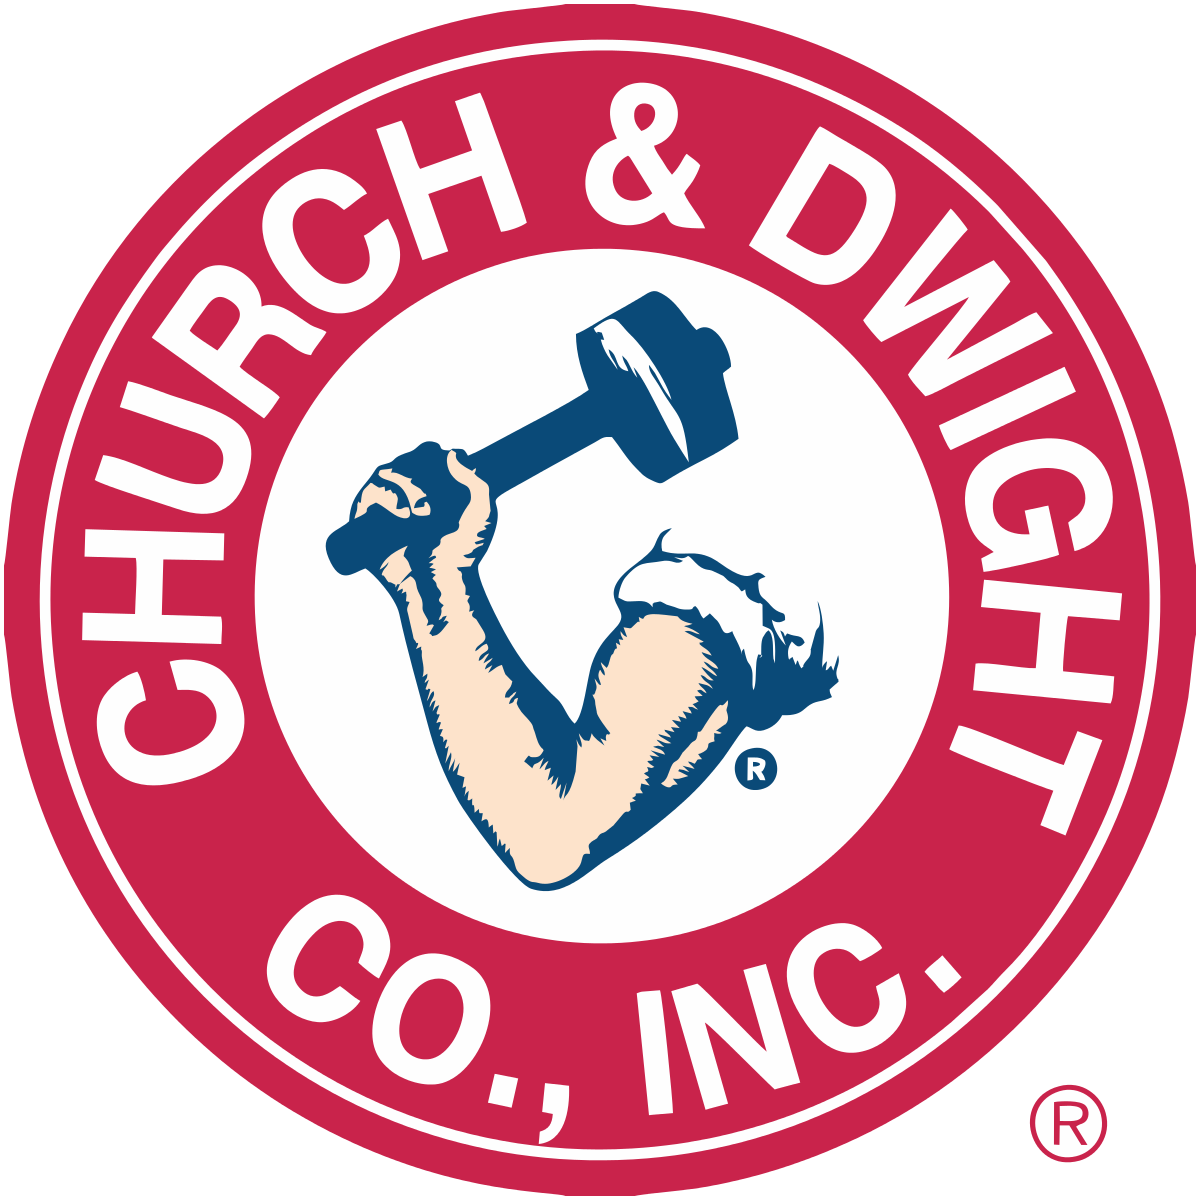 Church & Dwight Co., Inc.